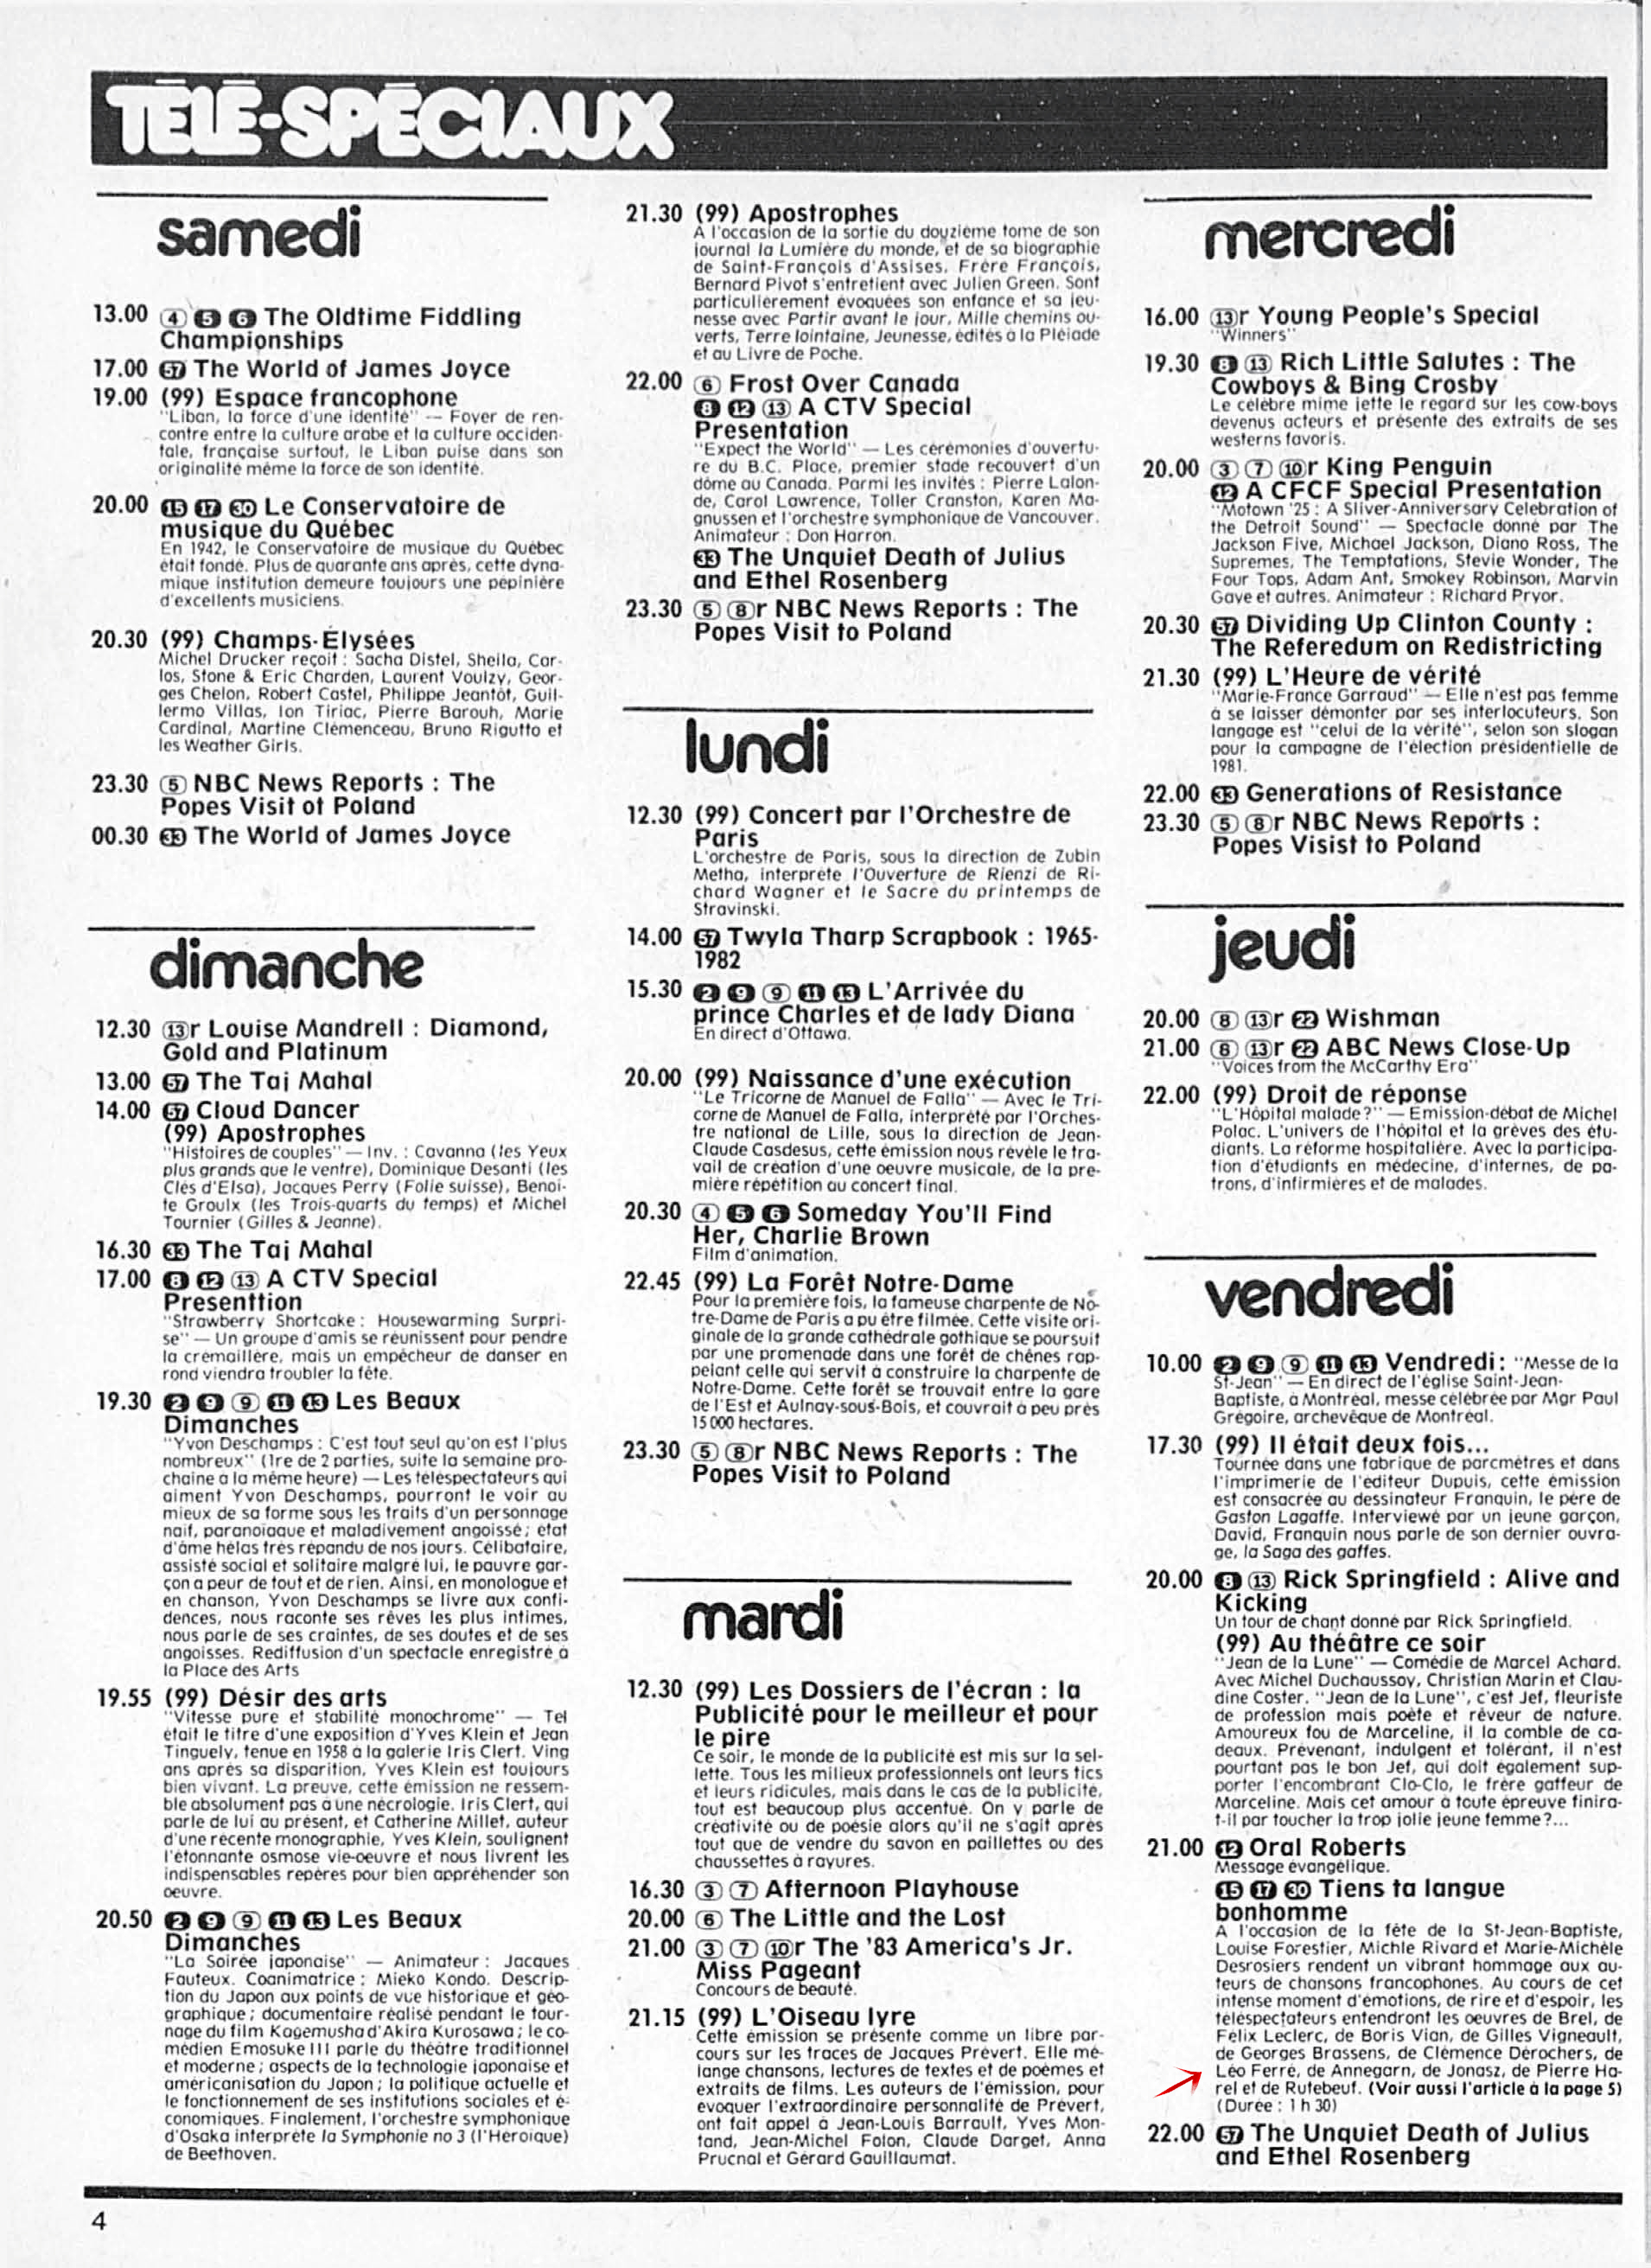 Léo Ferré - La Presse, 18 juin 1983, Télé presse